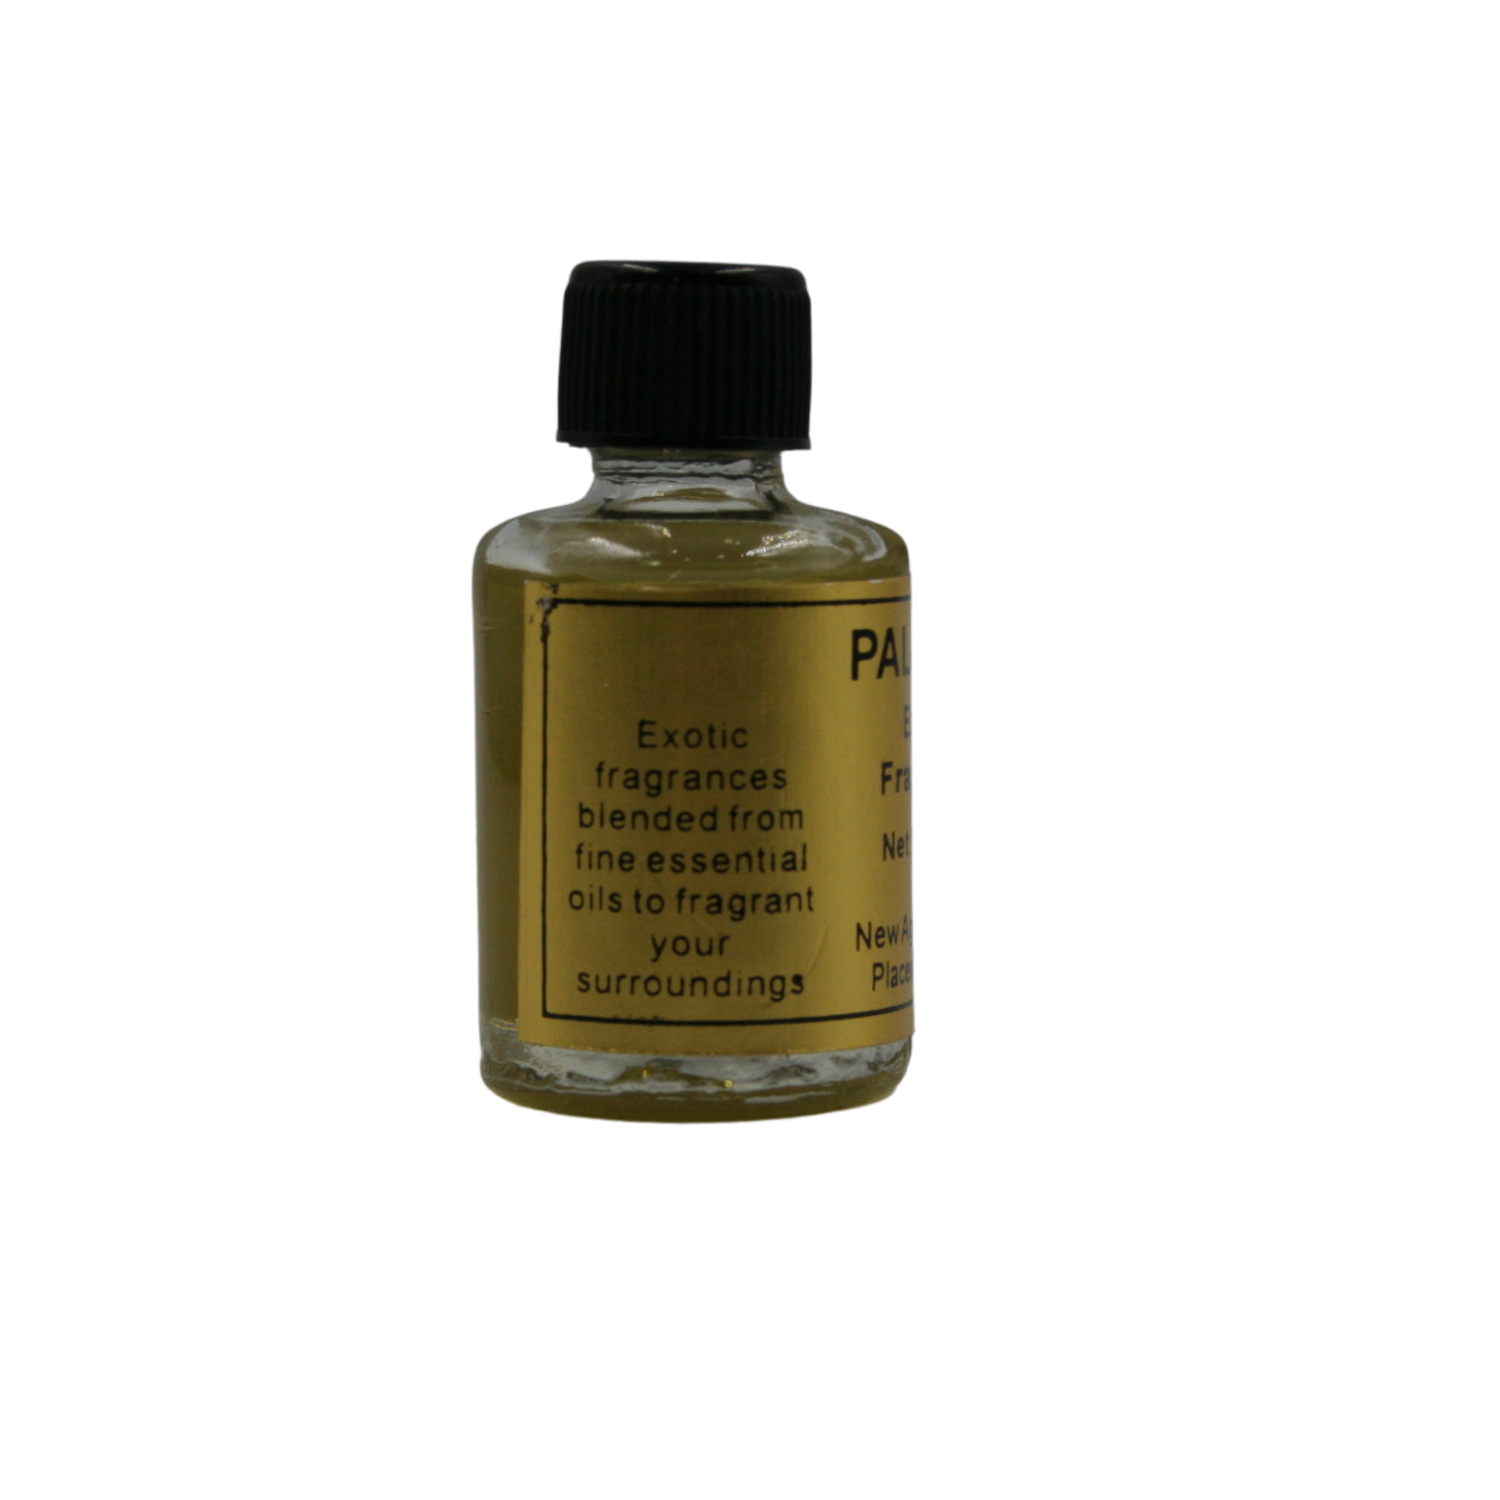 Palo Santo Essential Aroma Oil 10ml